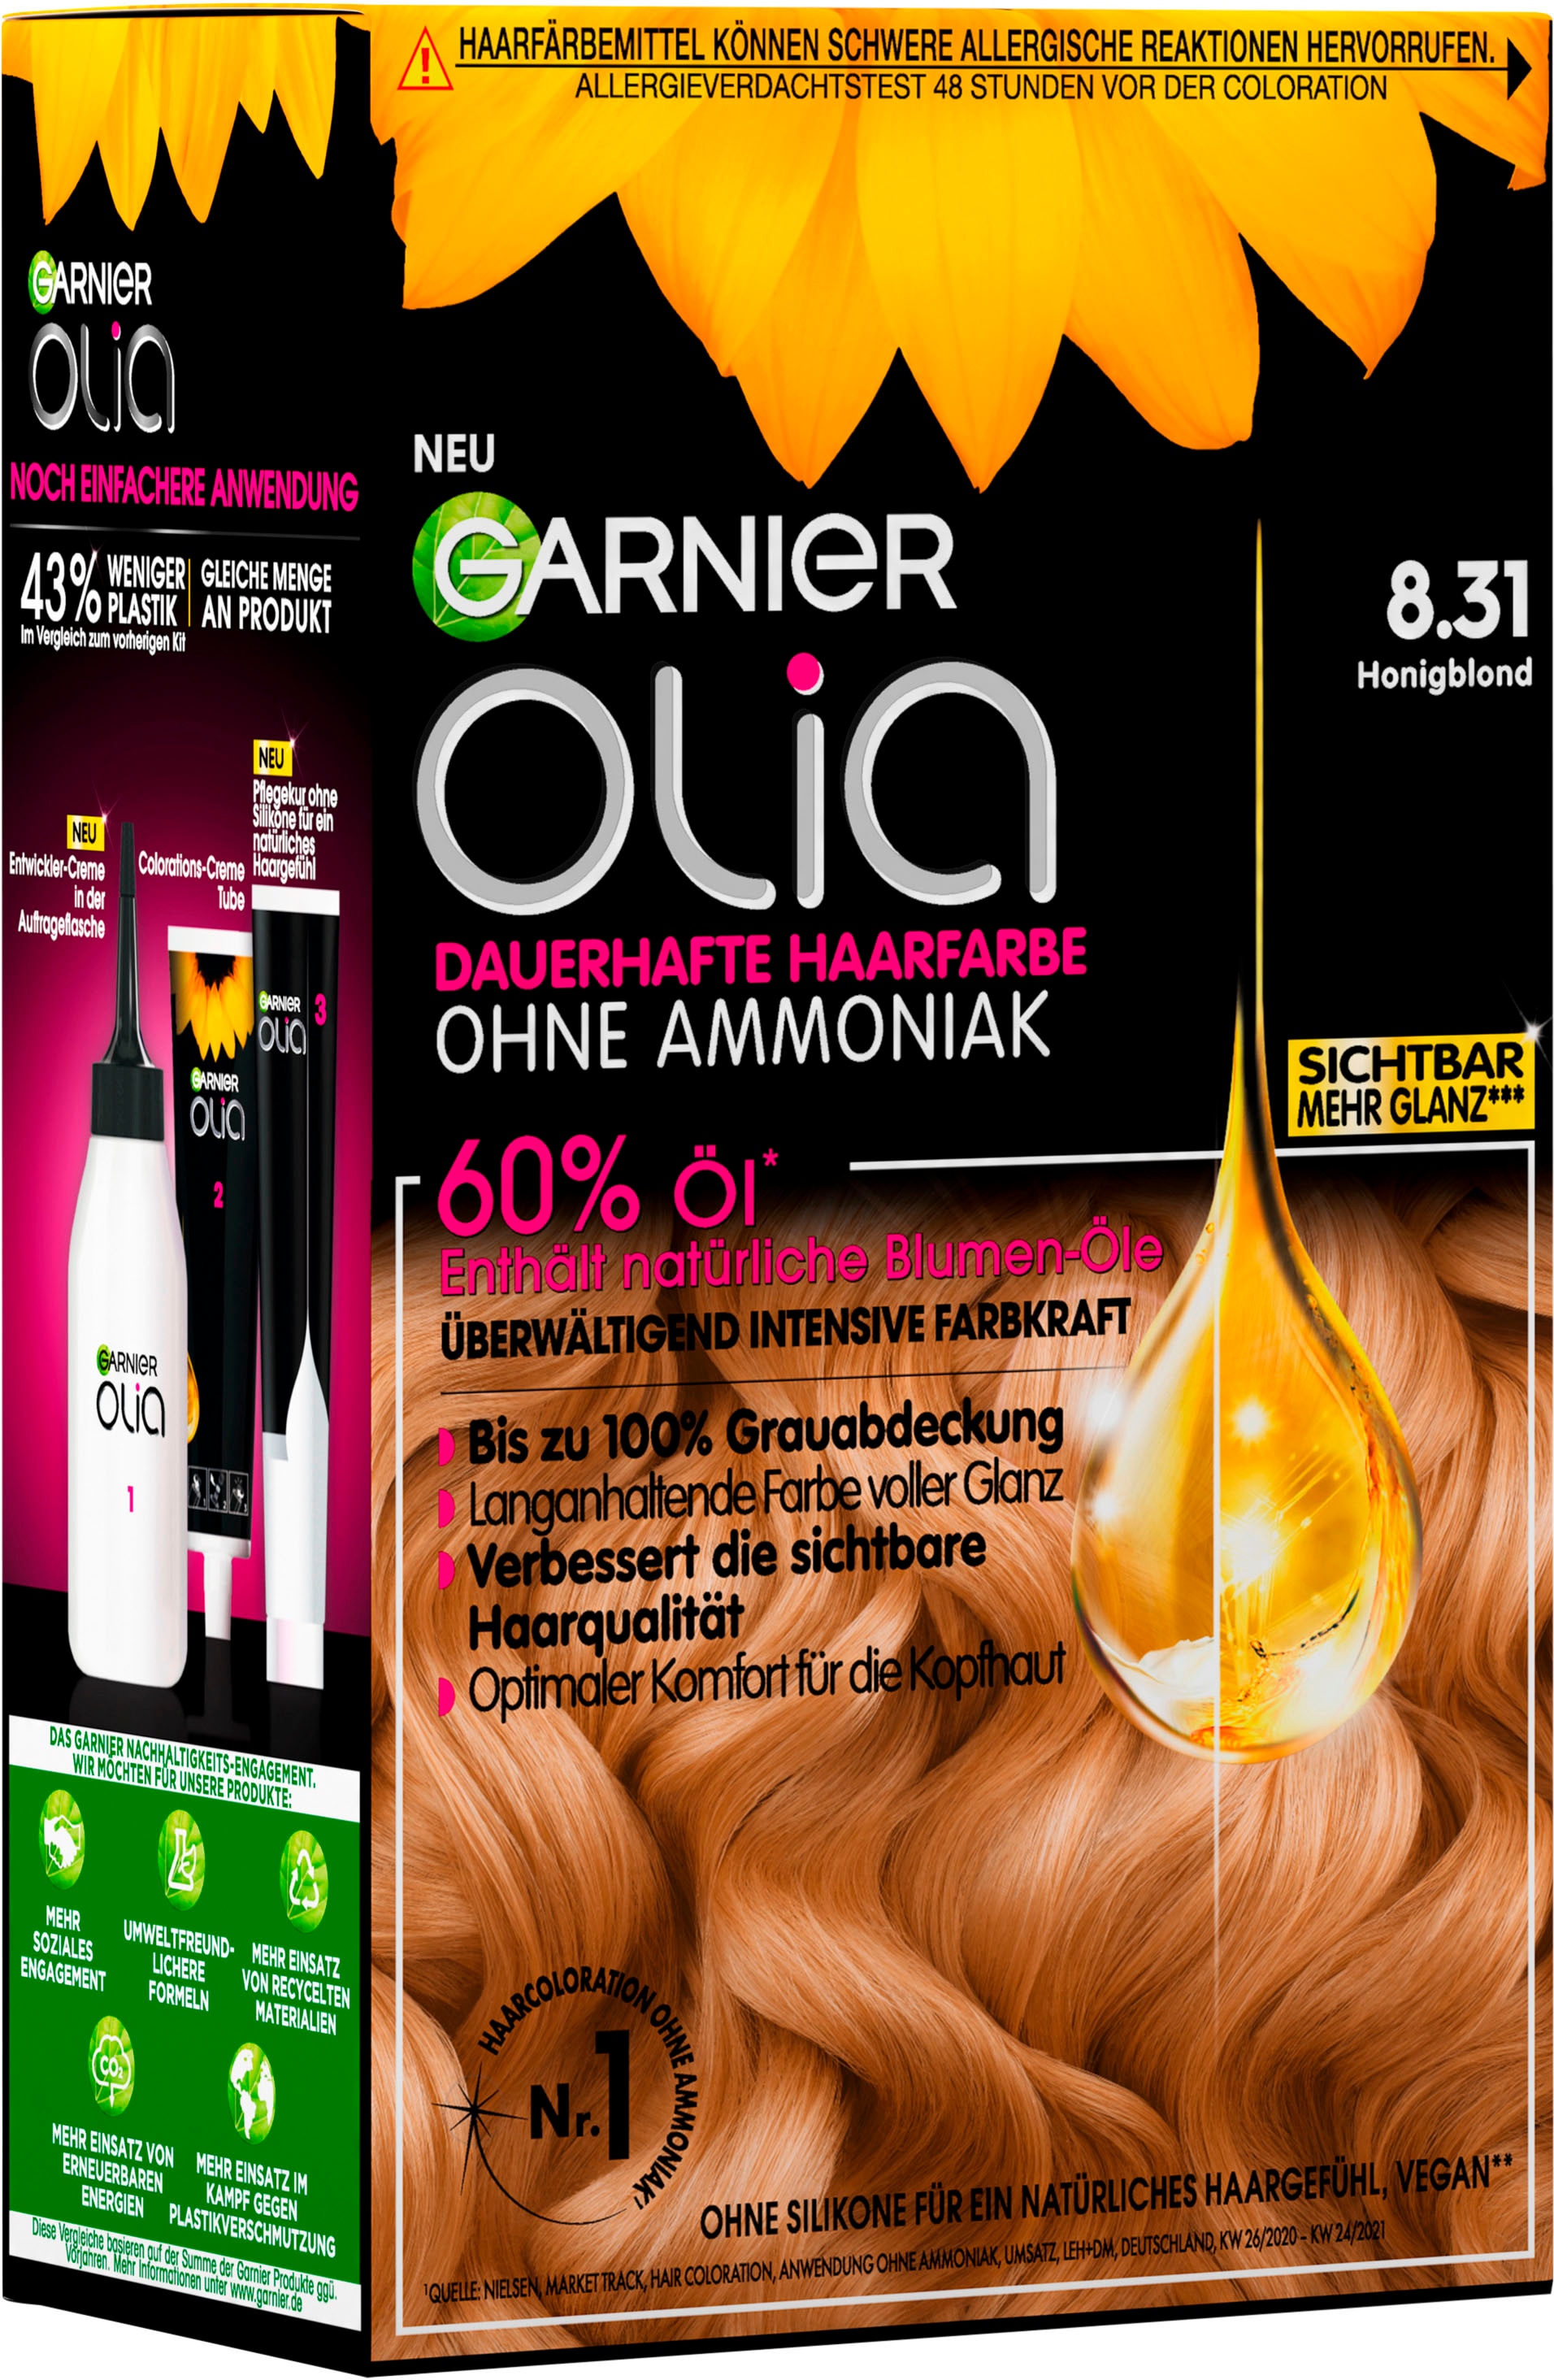 GARNIER Coloration »Garnier Olia dauerhafte | 8.31 BAUR tlg.), 3 Haarfarbe«, (Set, Honigblond